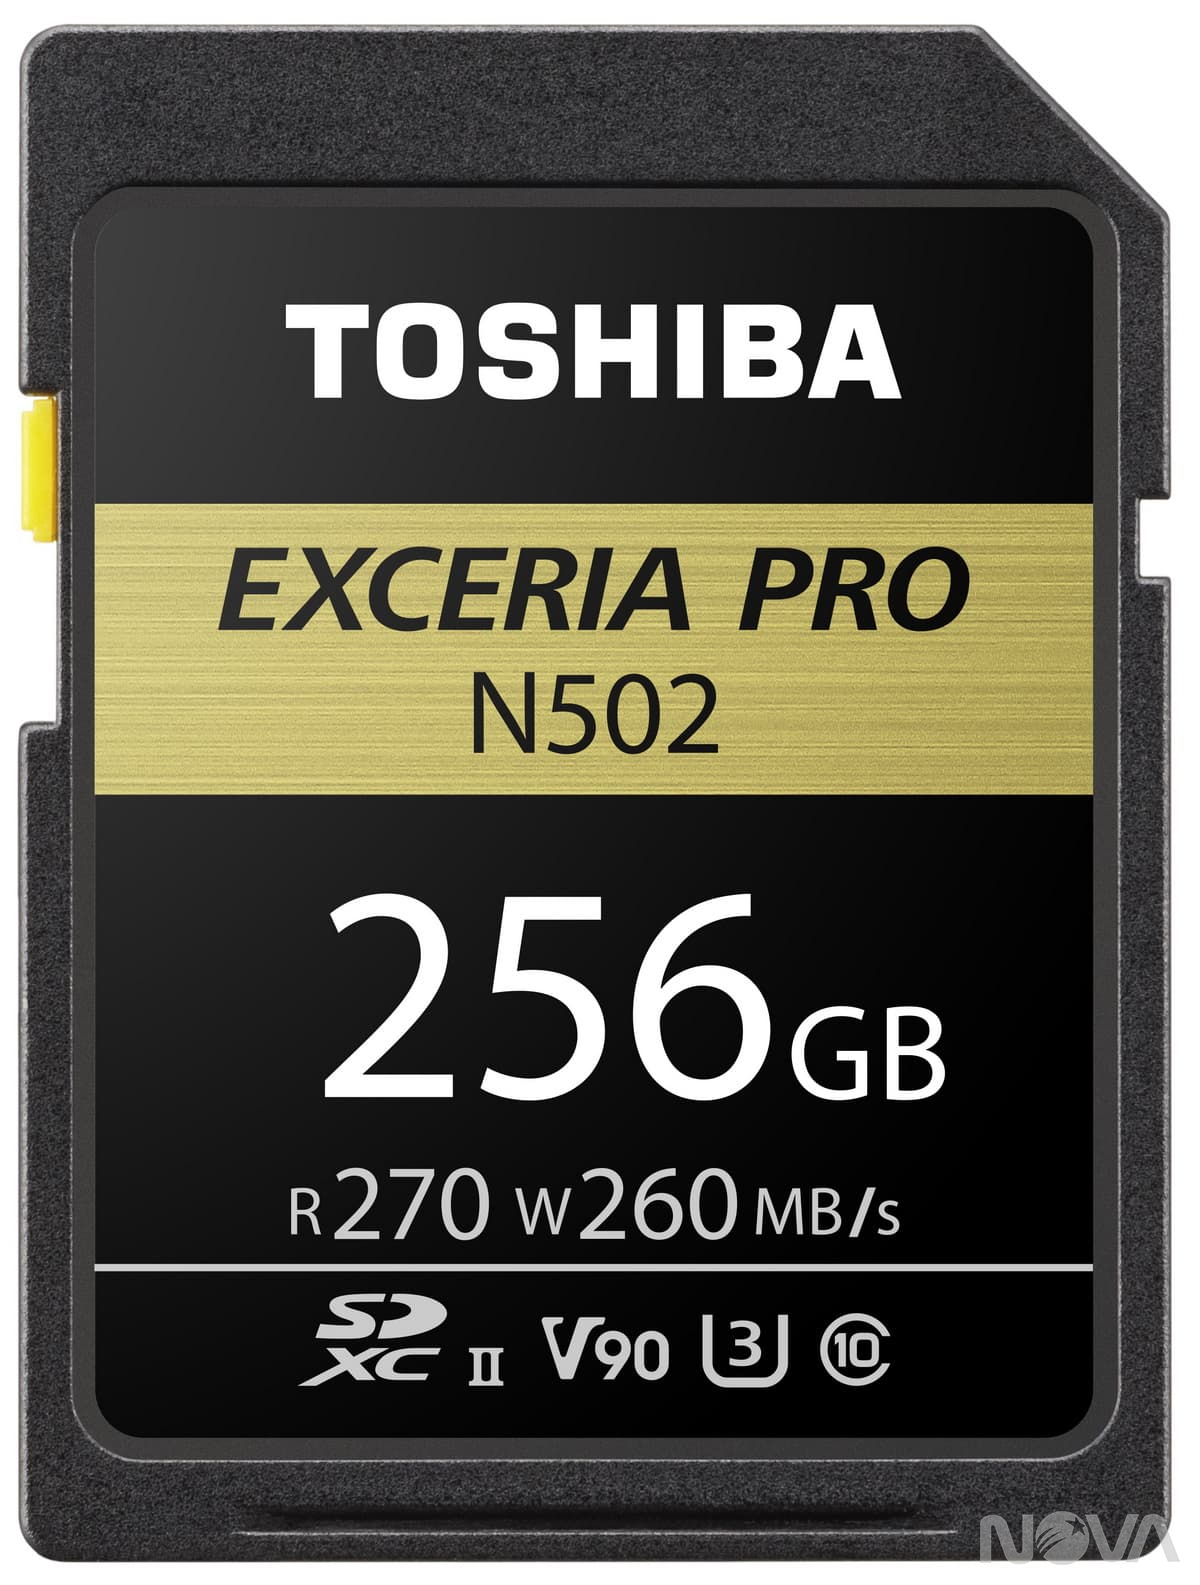 Toshiba EXCERIA PRO N502 U3 V90 SDXC